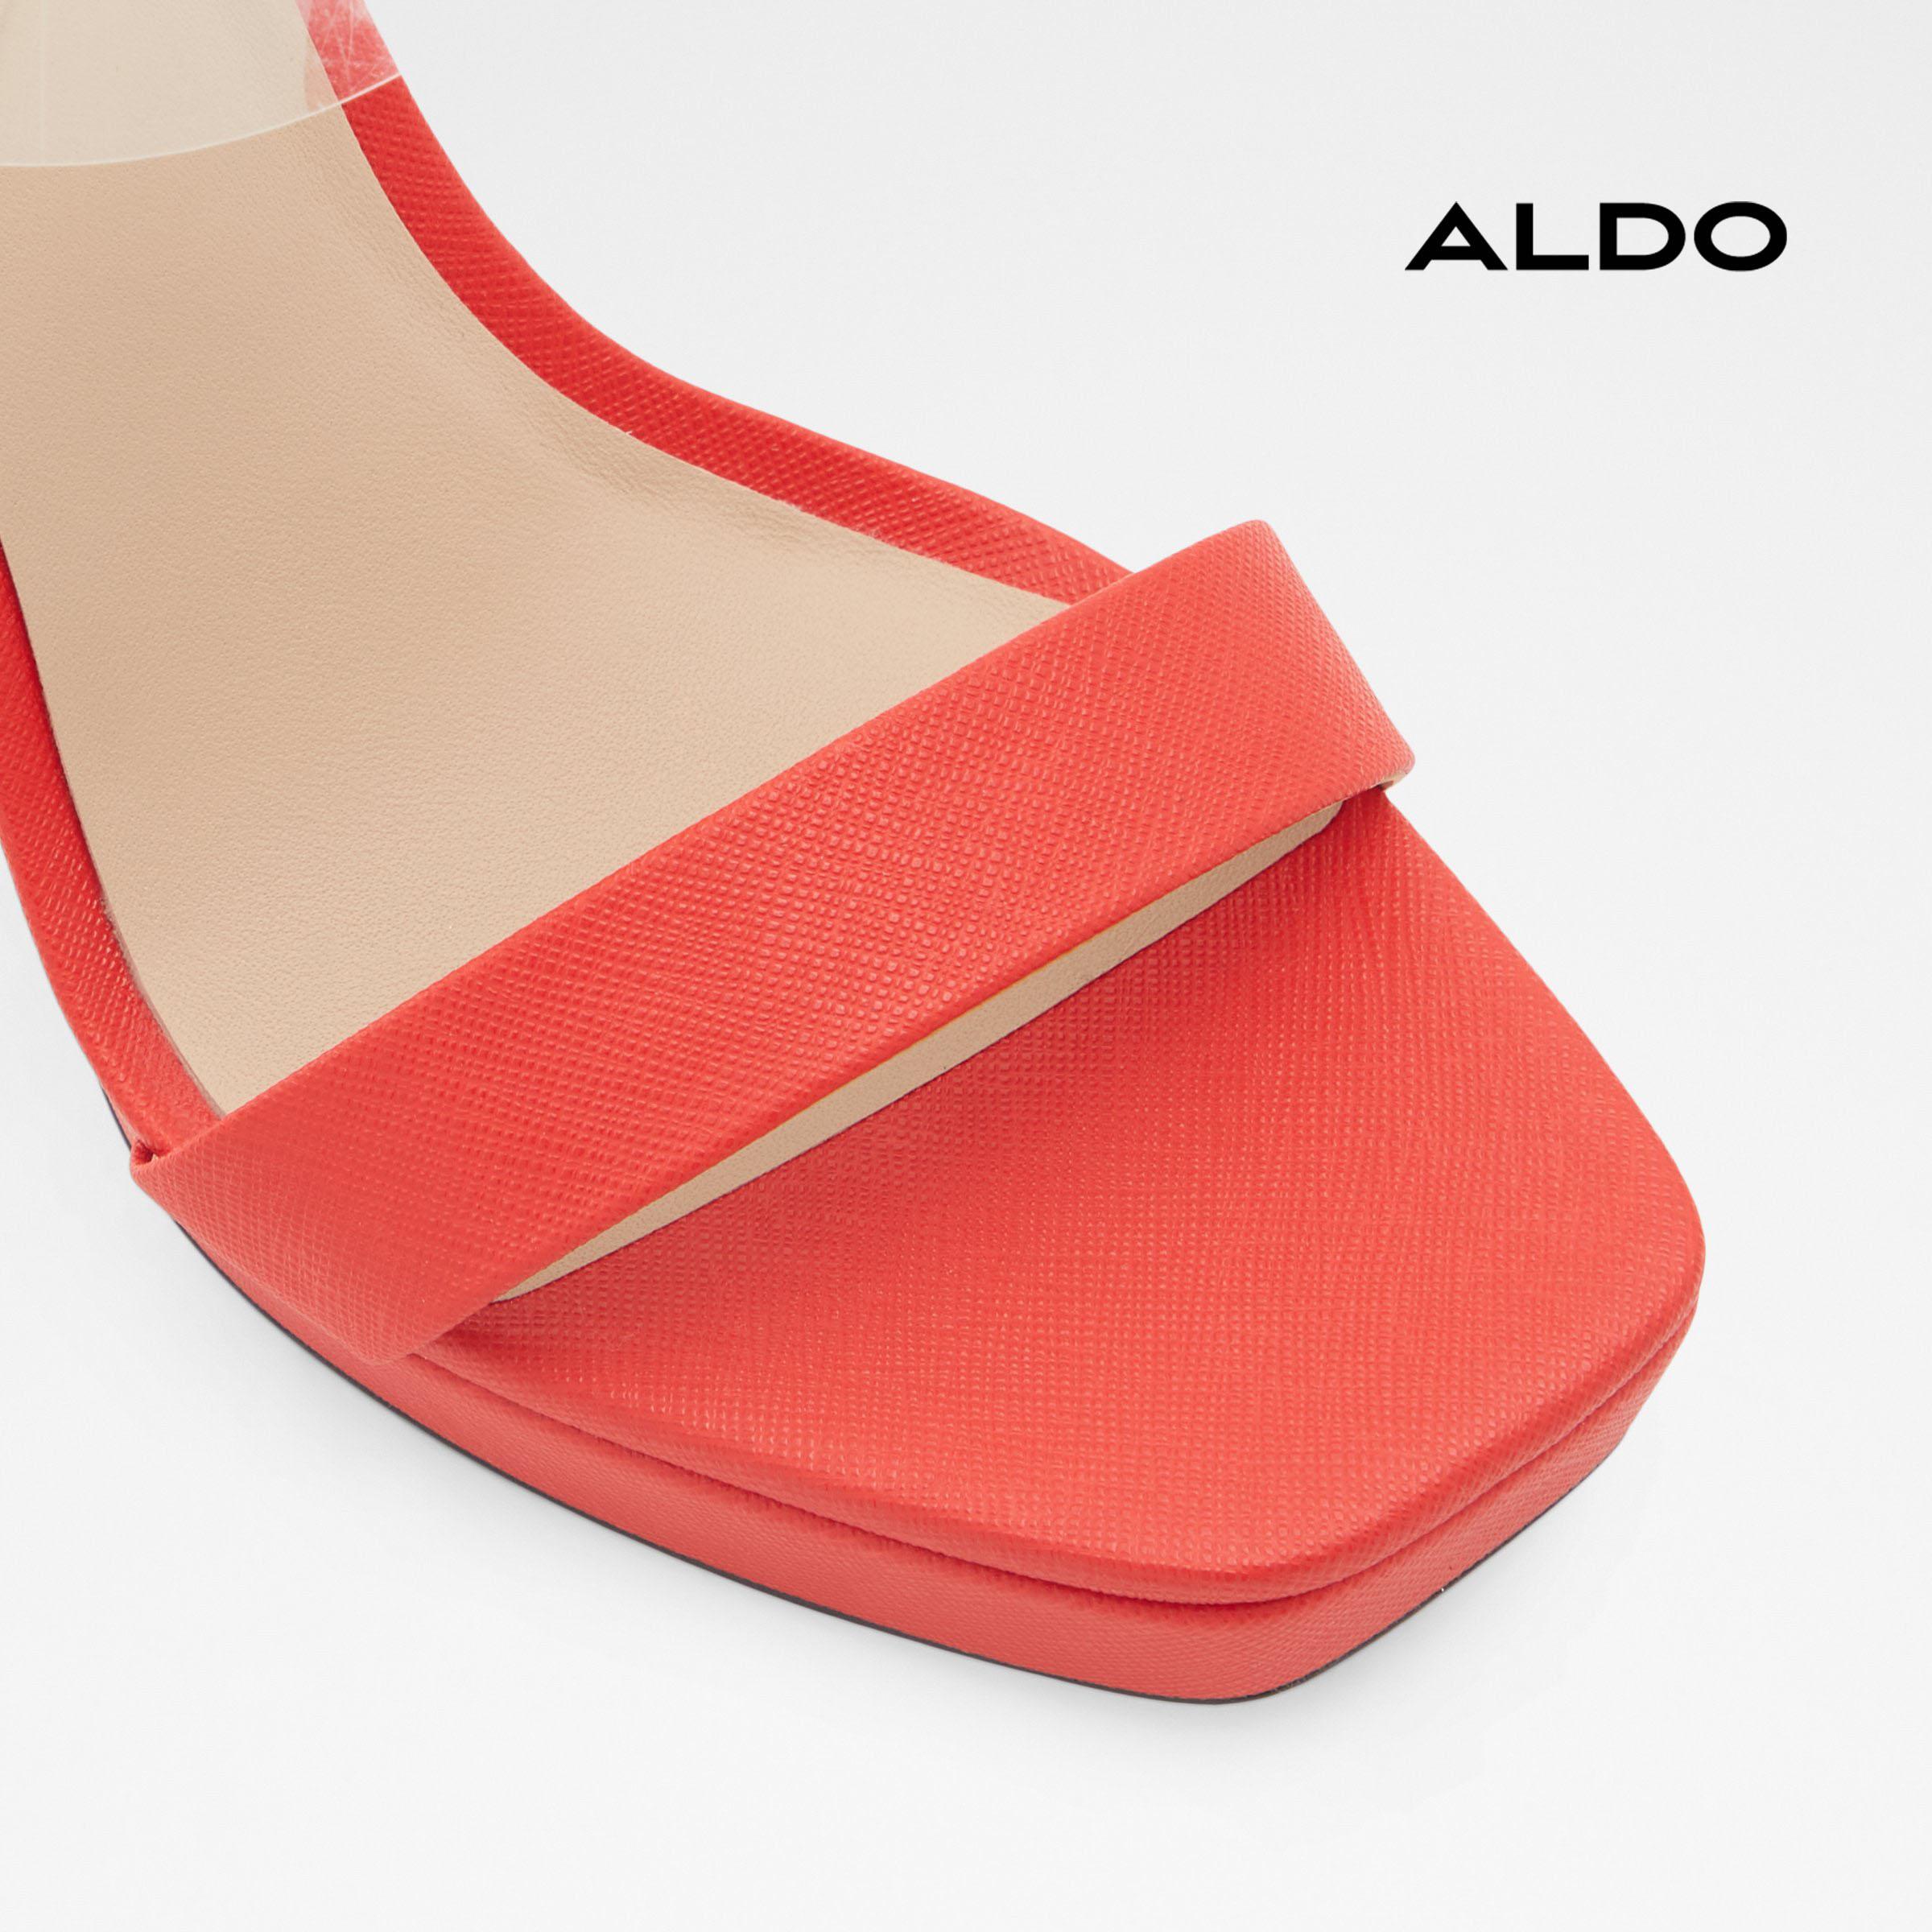 Sandal cao gót nữ Aldo SCARLETTCHAIN